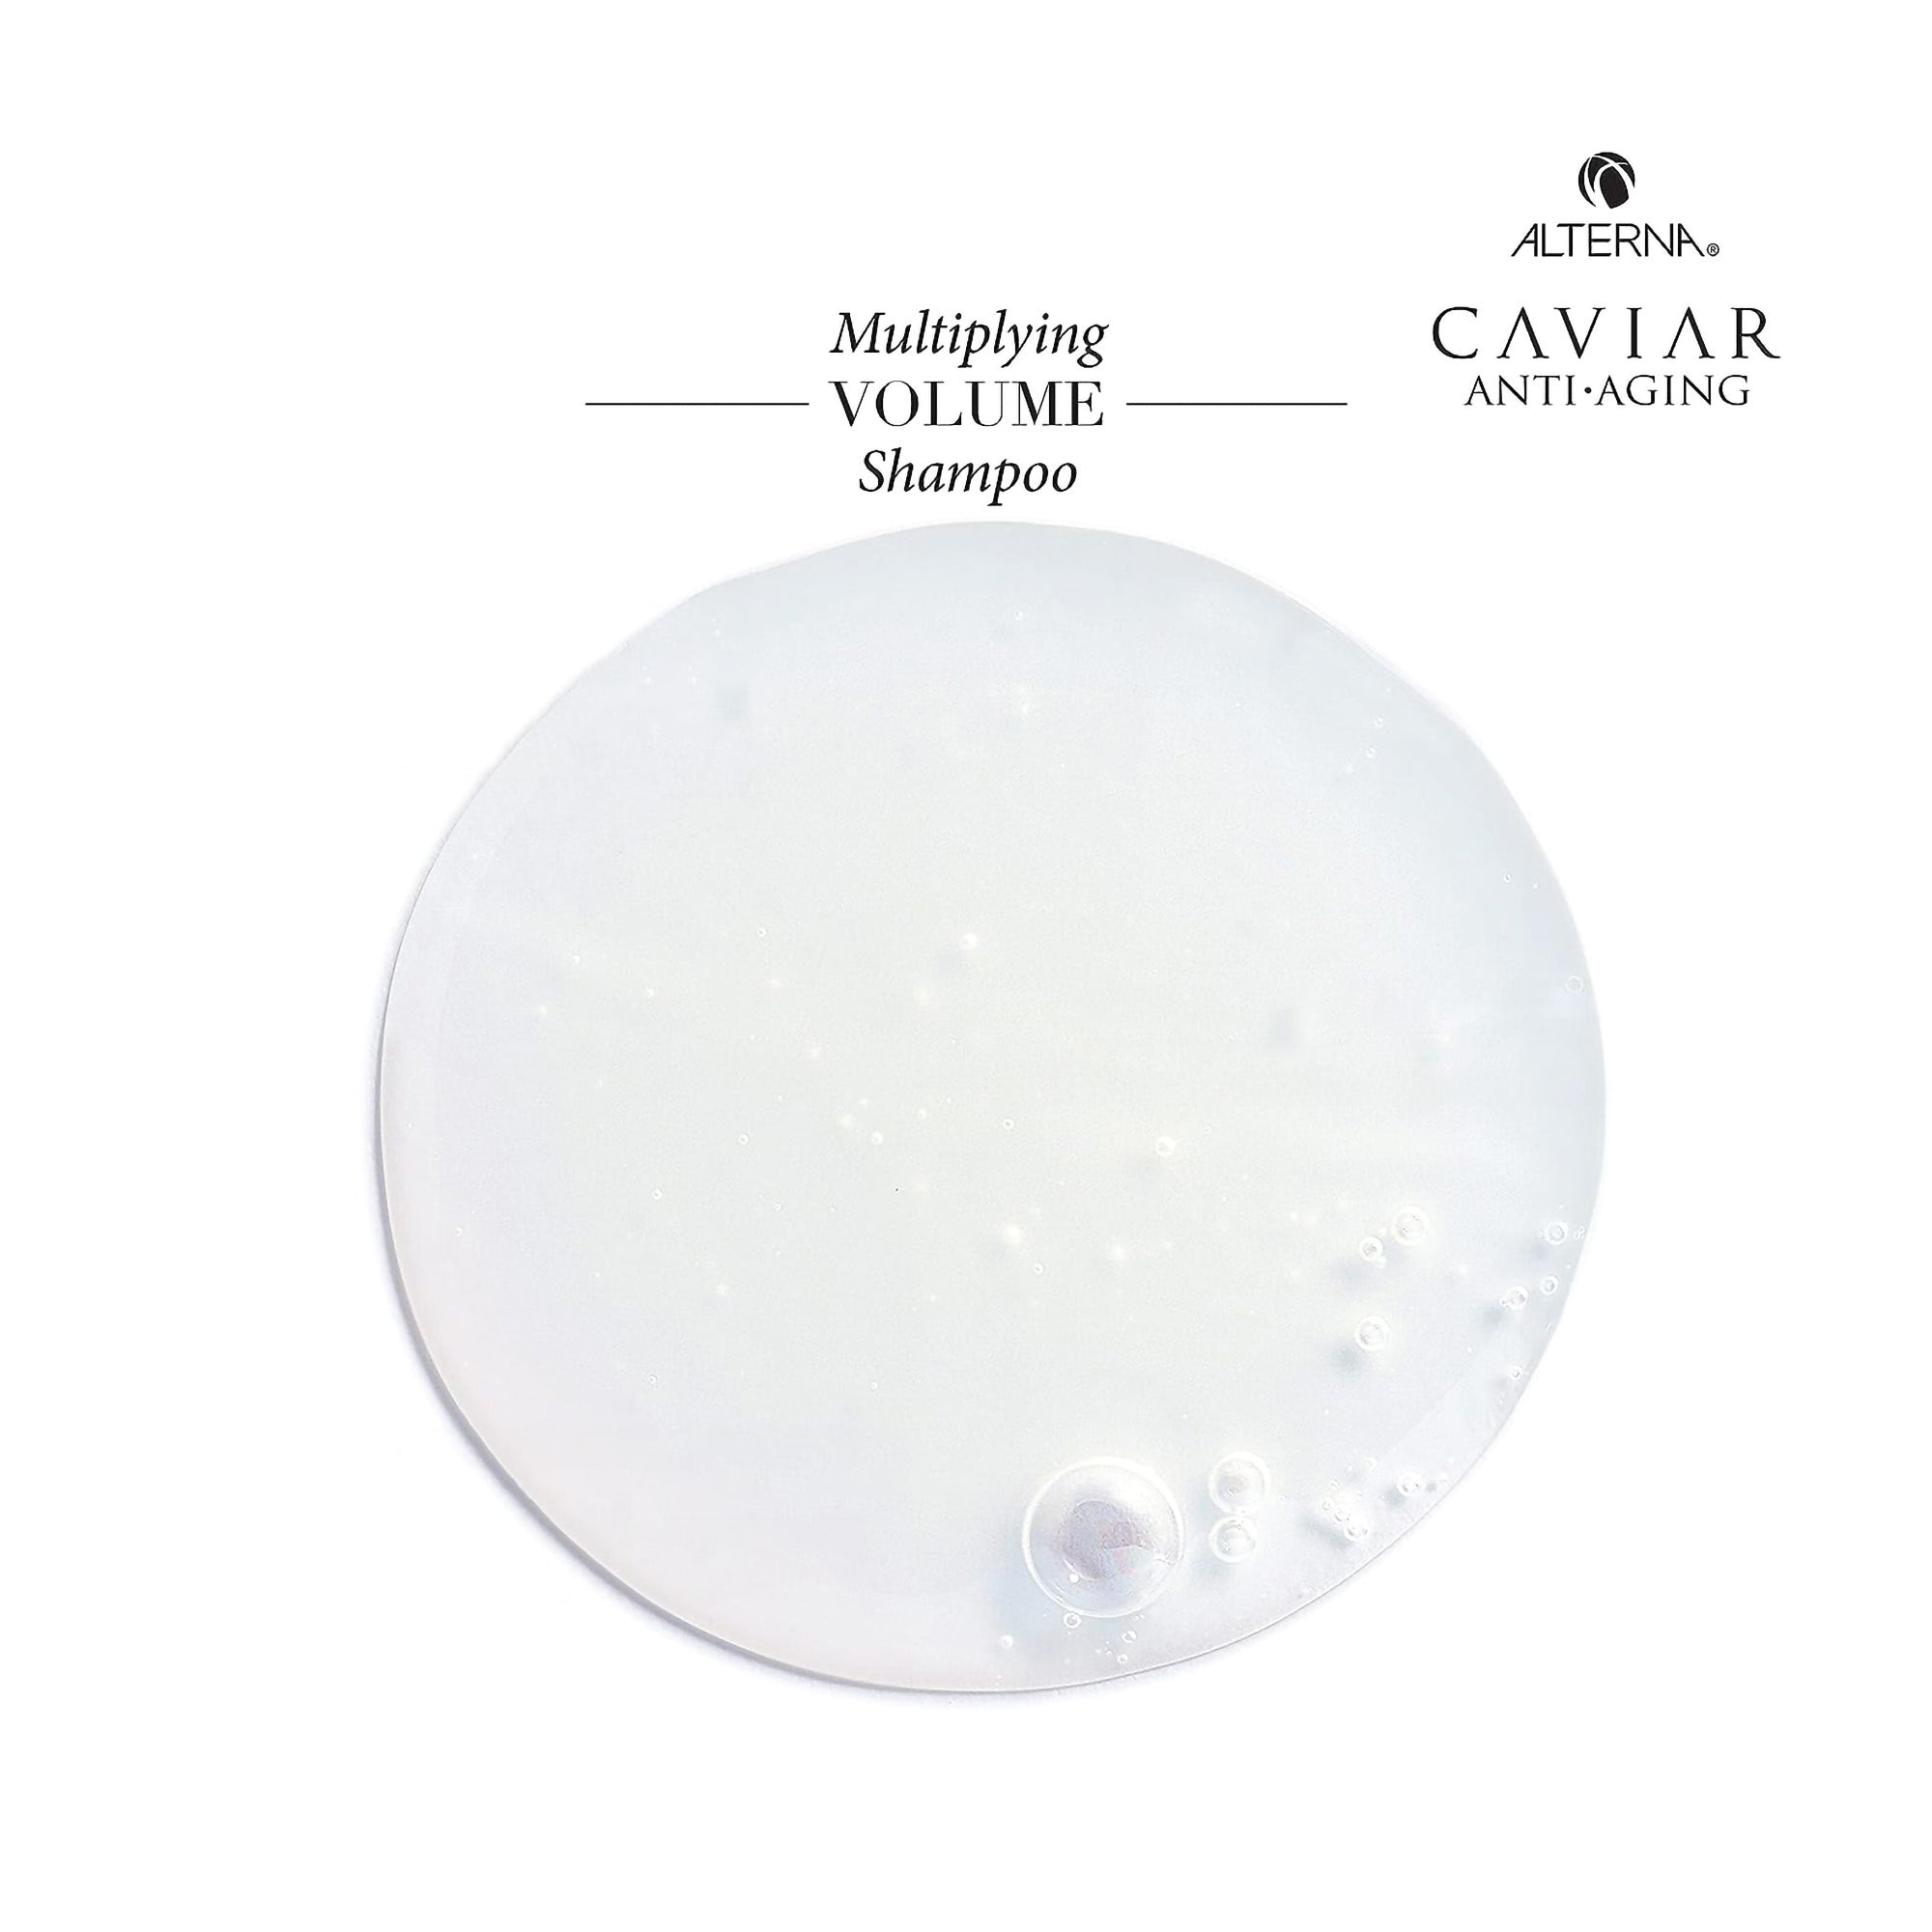 Alterna Caviar Anti-aging Multiplying Volume Shampoo - 33oz / 33OZ